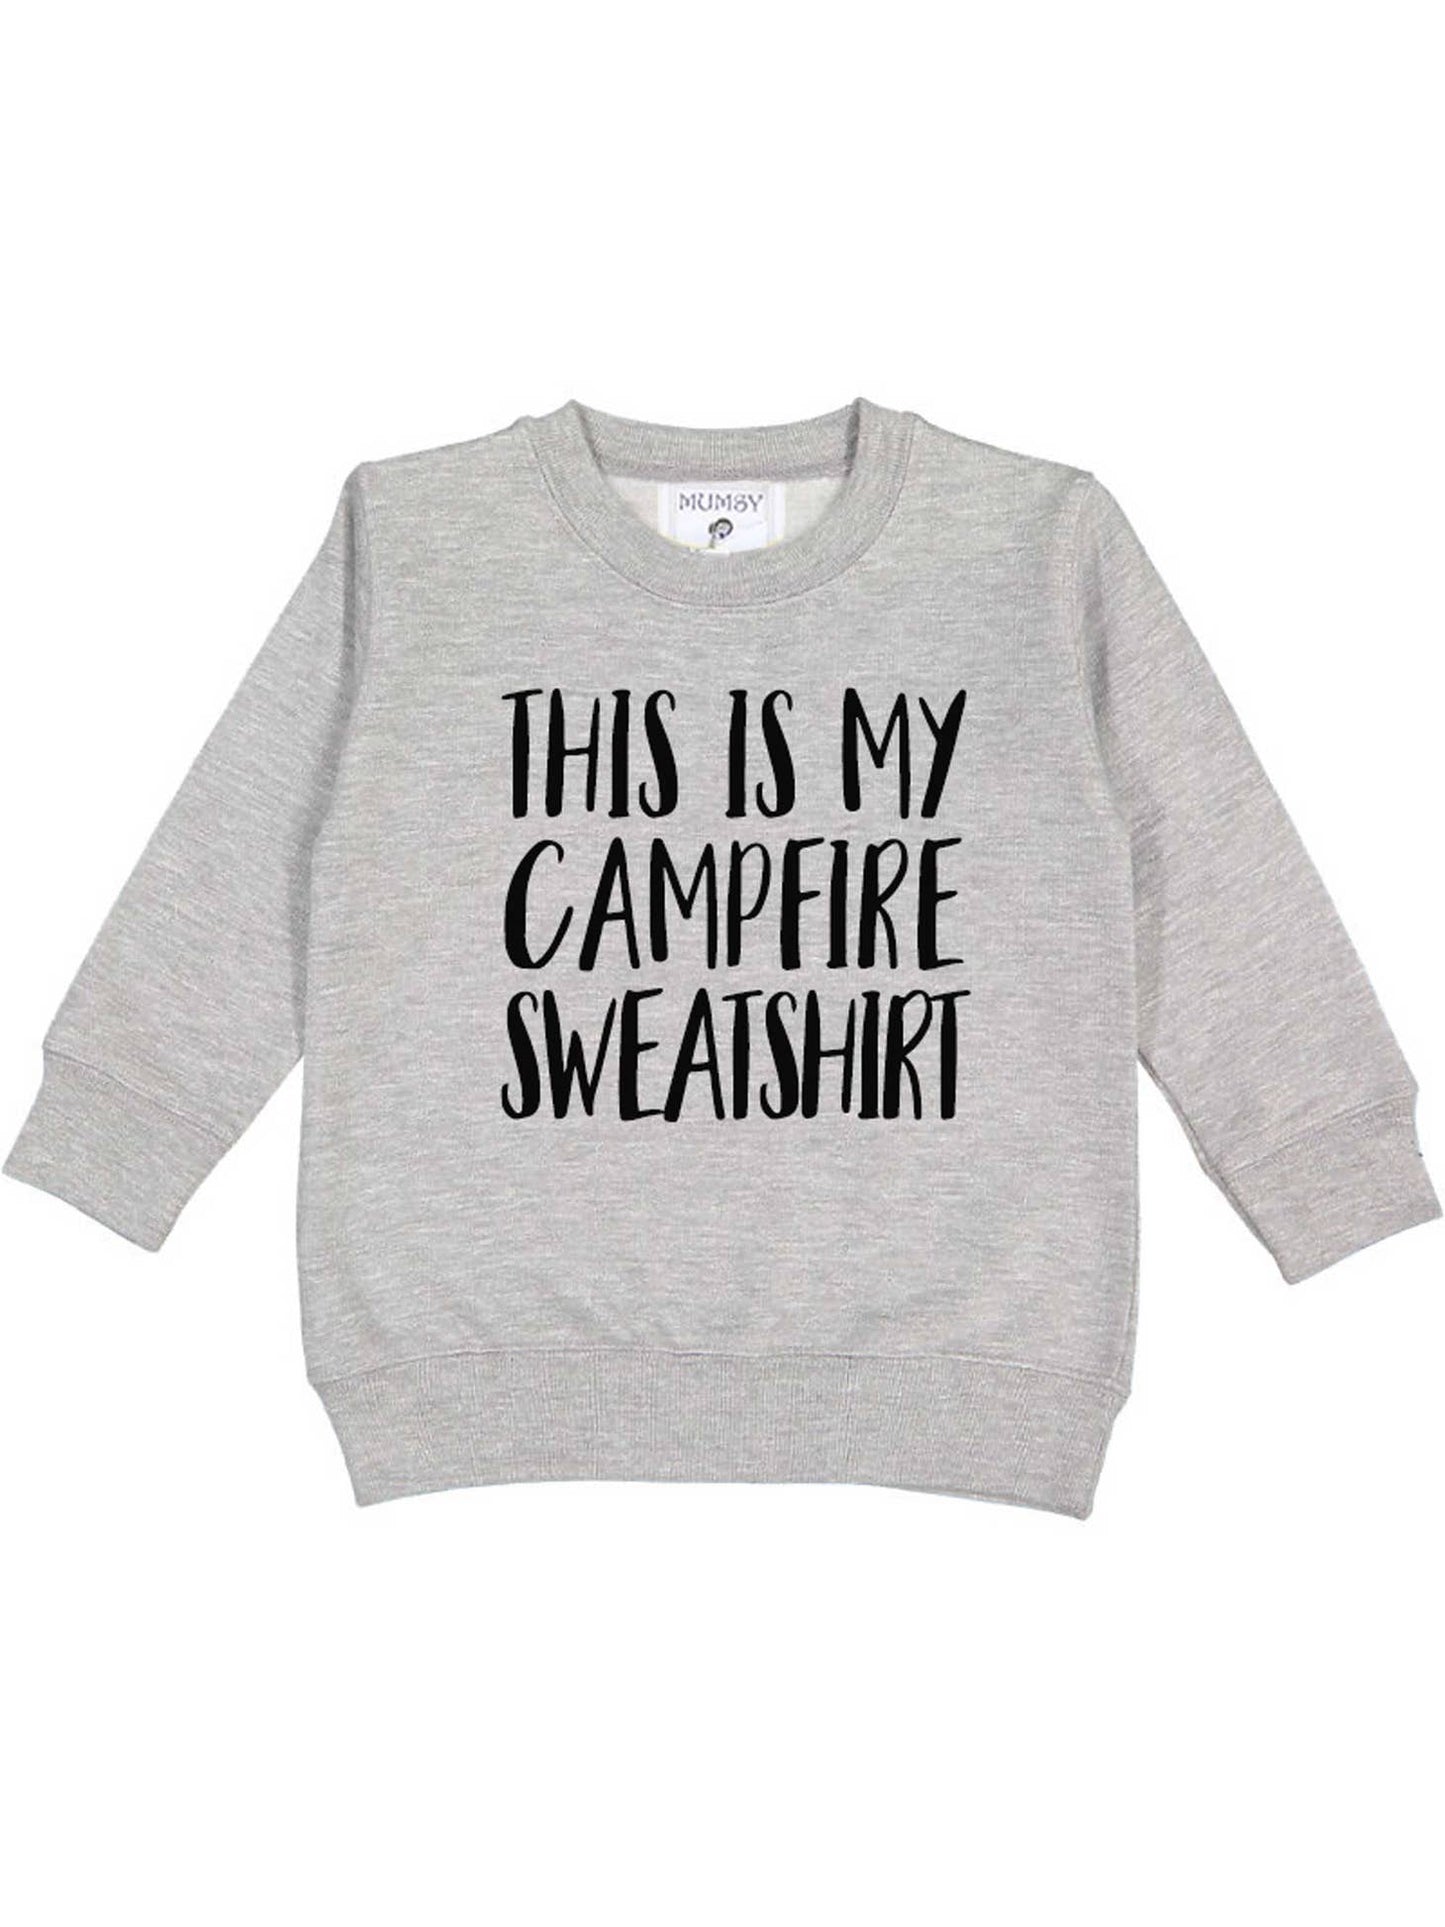 Campfire Sweatshirt Youth